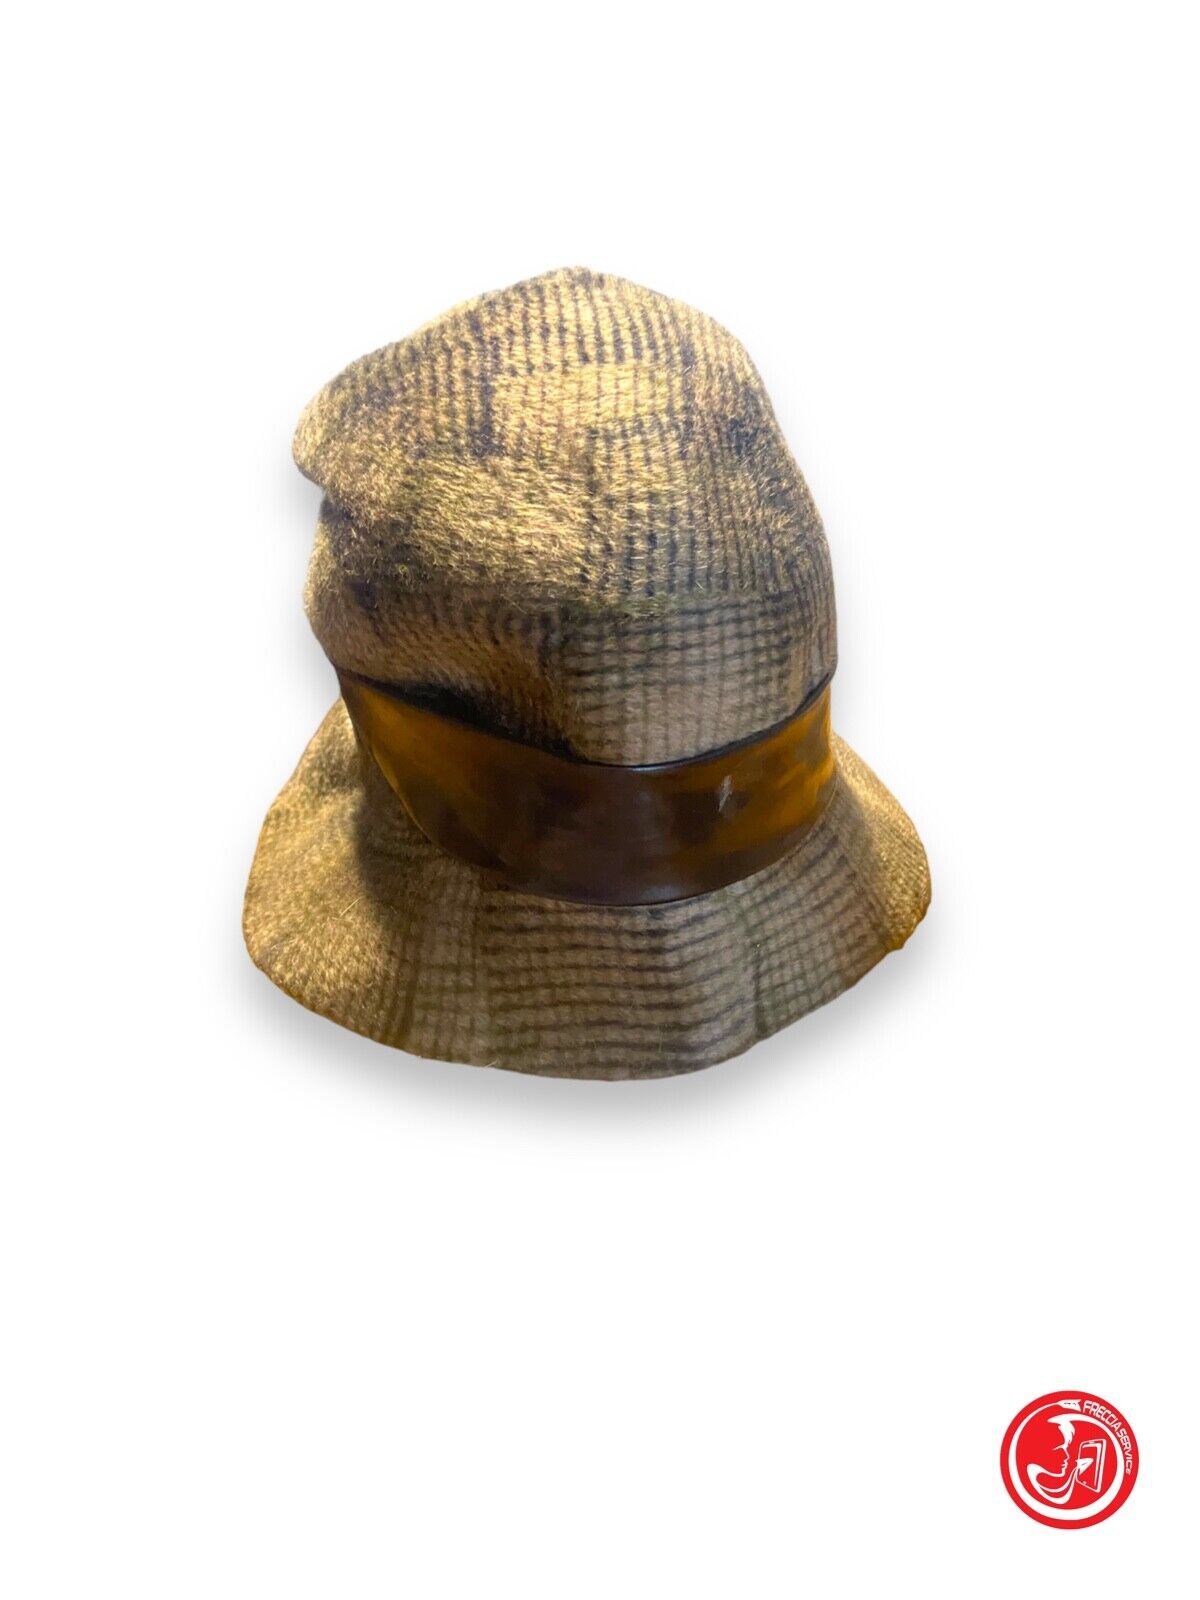 Tealais genuine leather hat 